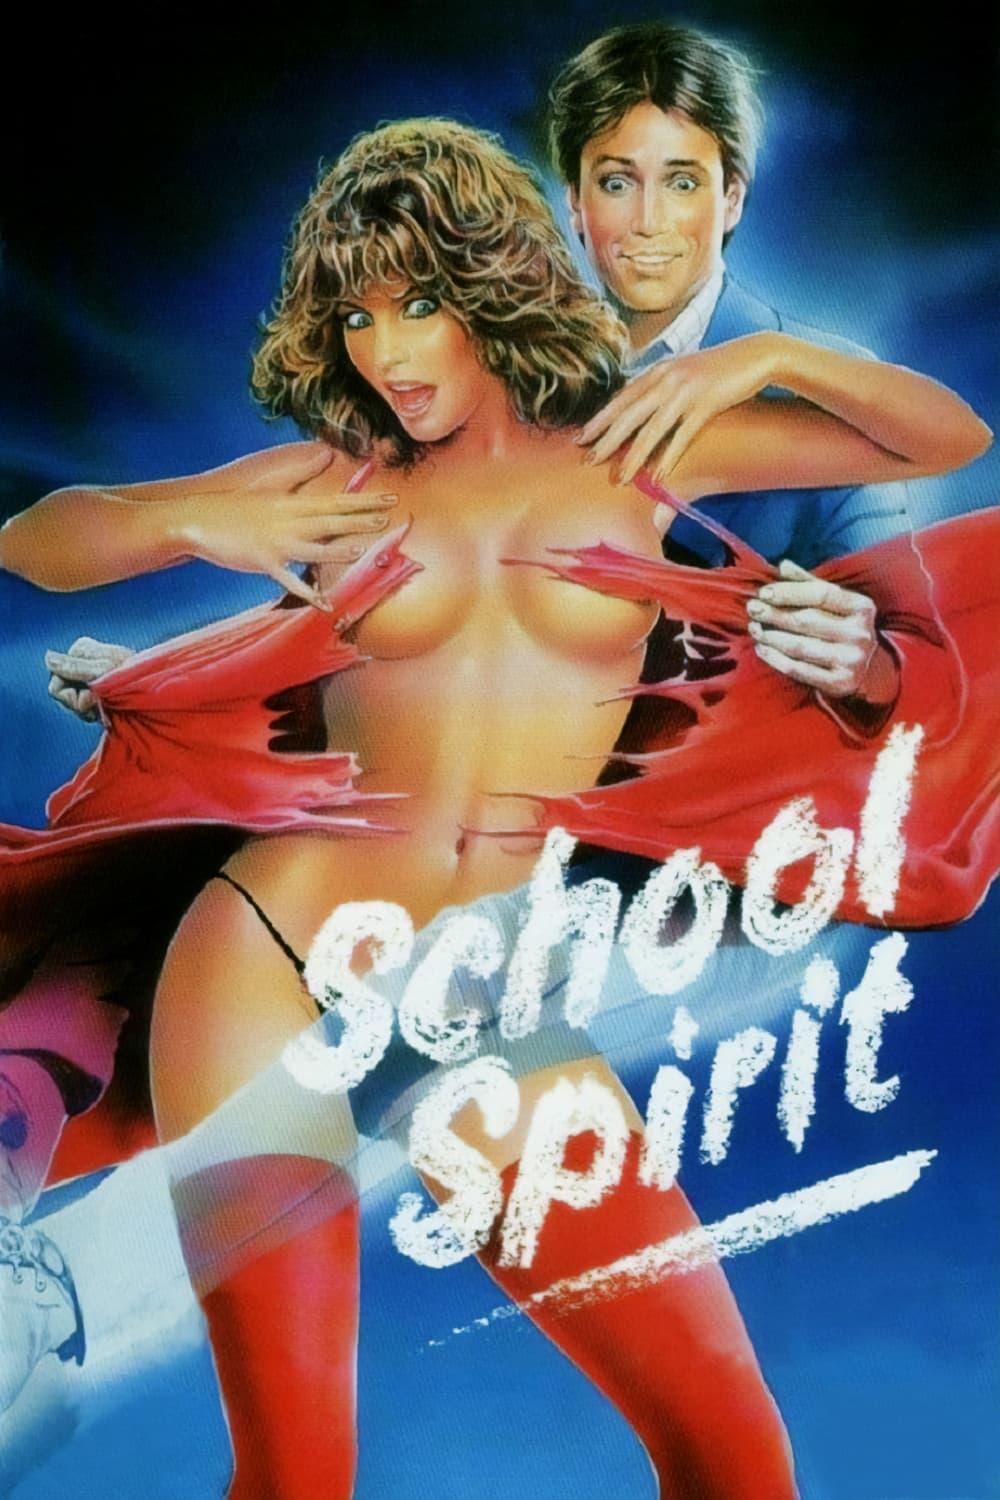 School Spirit poster